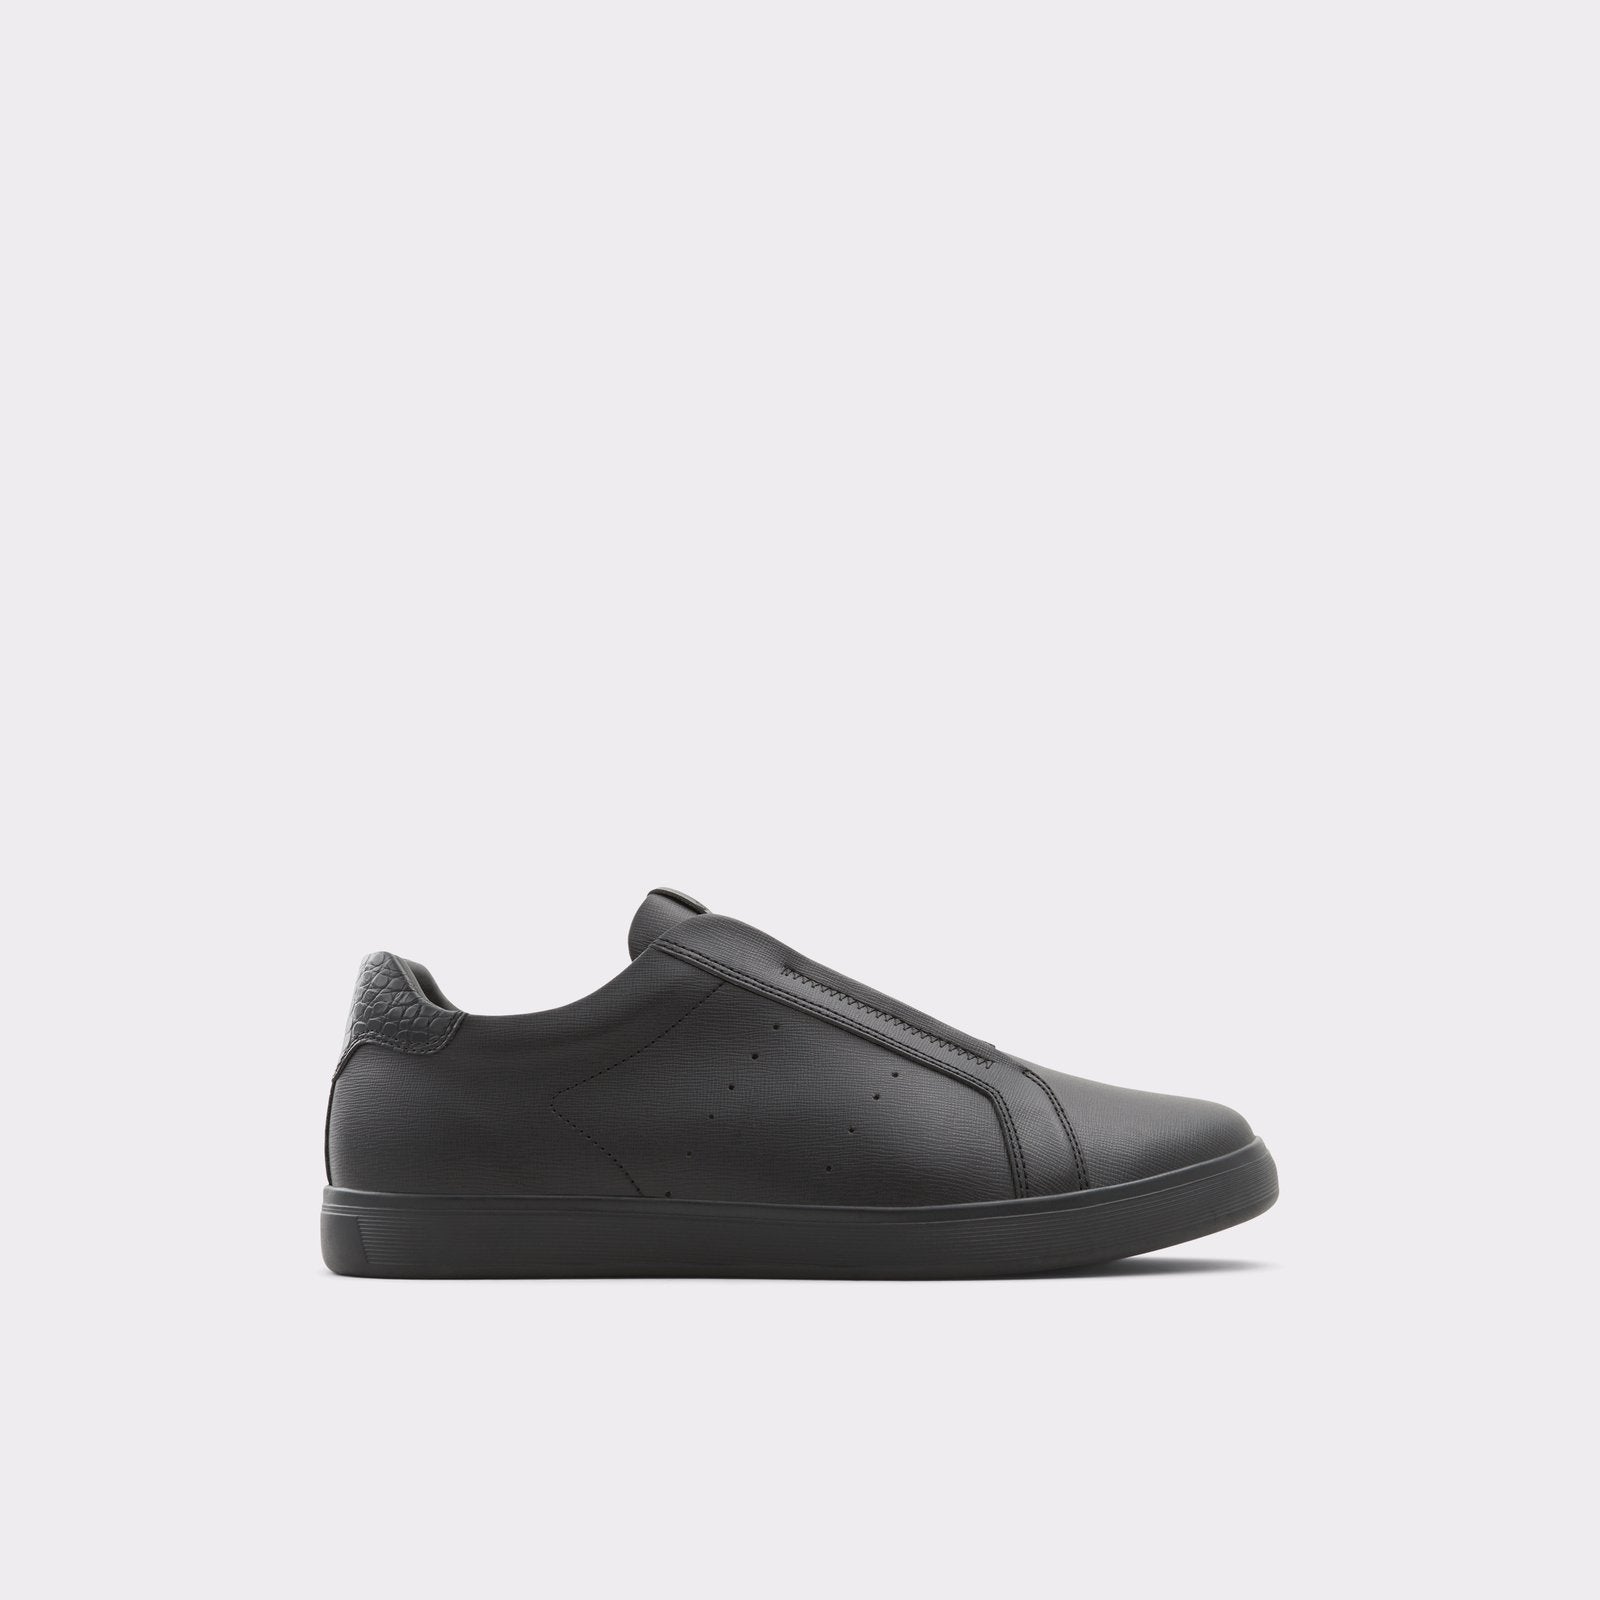 Boomerangg Men Shoes - Black - ALDO KSA